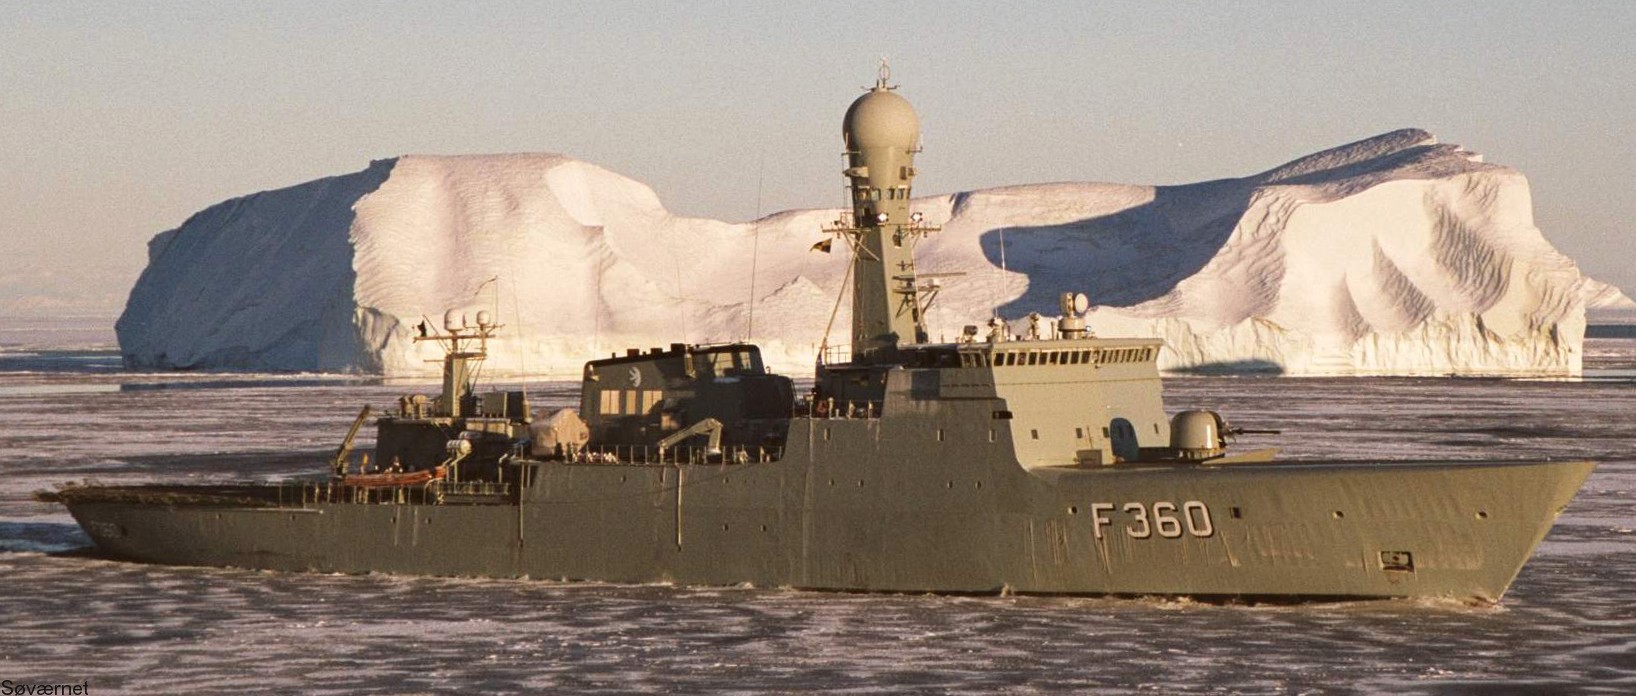 f-360 hdms hvidbjornen thetis class ocean patrol frigate royal danish navy kongelige danske marine kdm inspektionsskibet 14a arctic ice